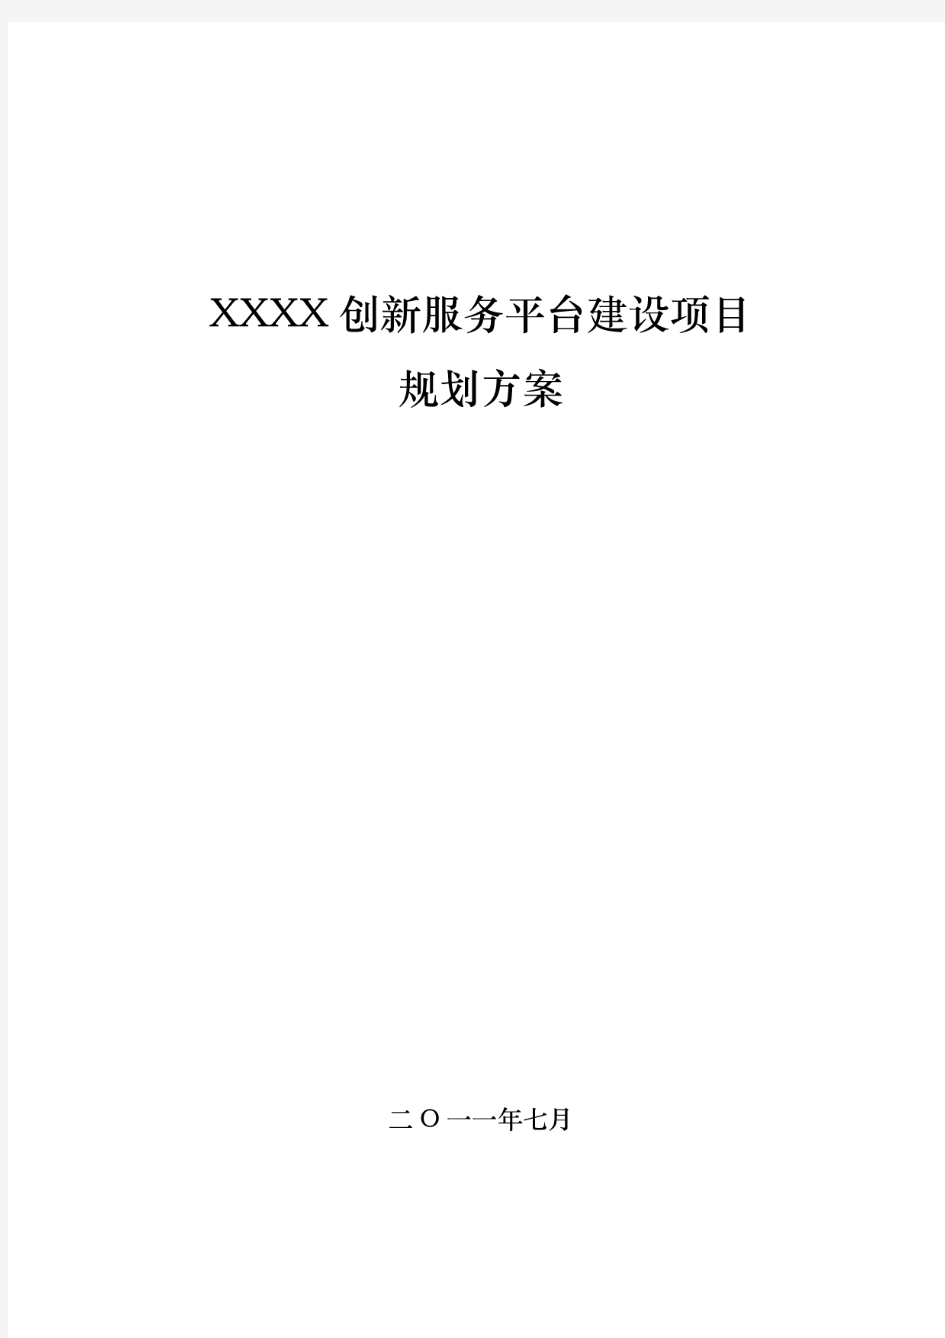 XXXX创新服务平台建设项目规划方案